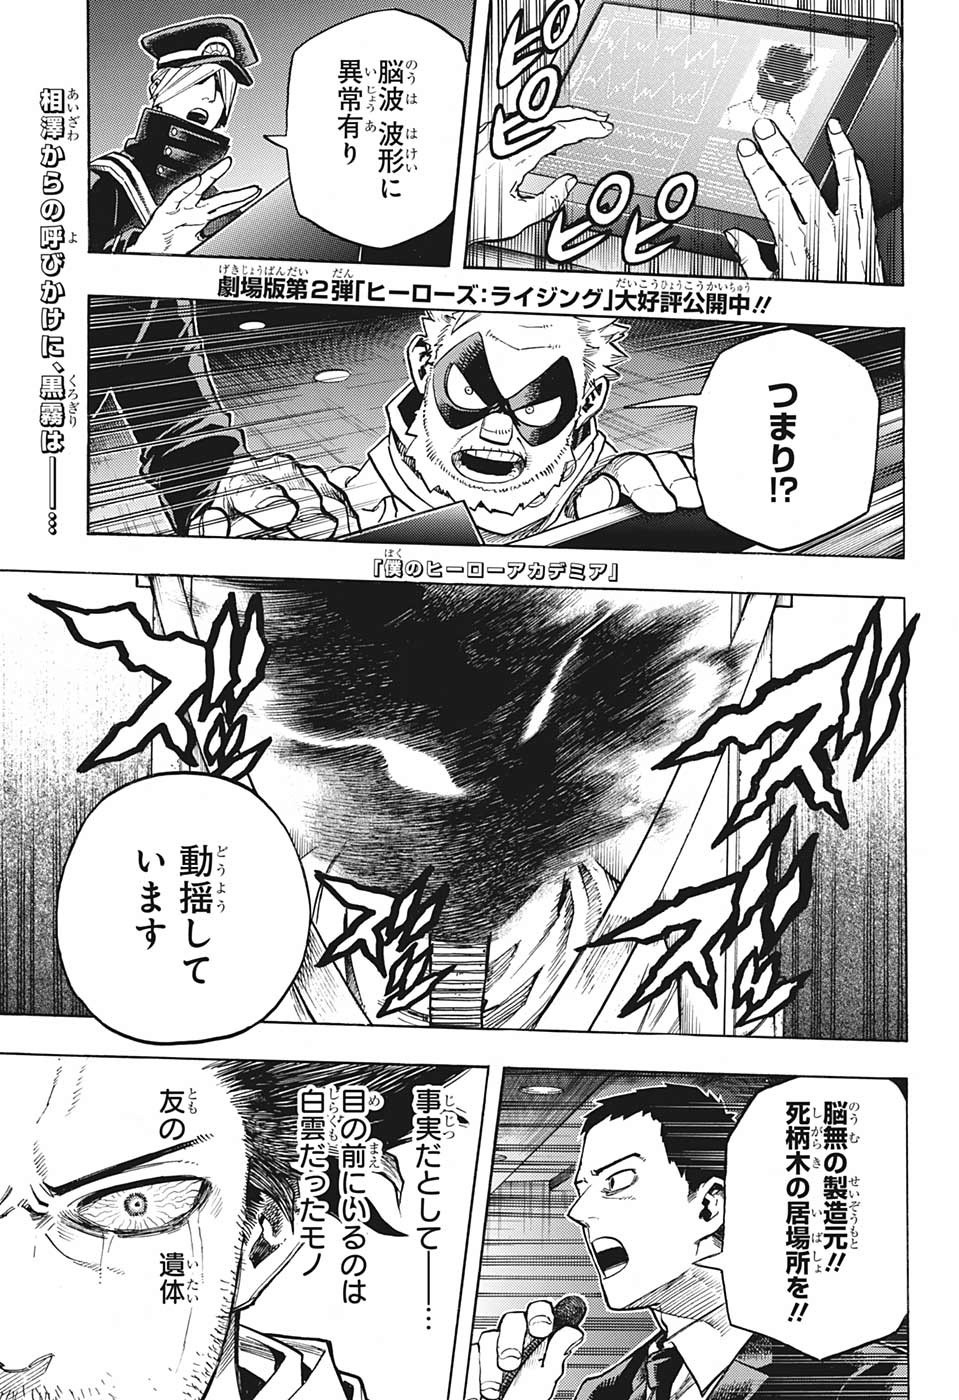 Boku no Hero Academia - Chapter 255 - Page 1